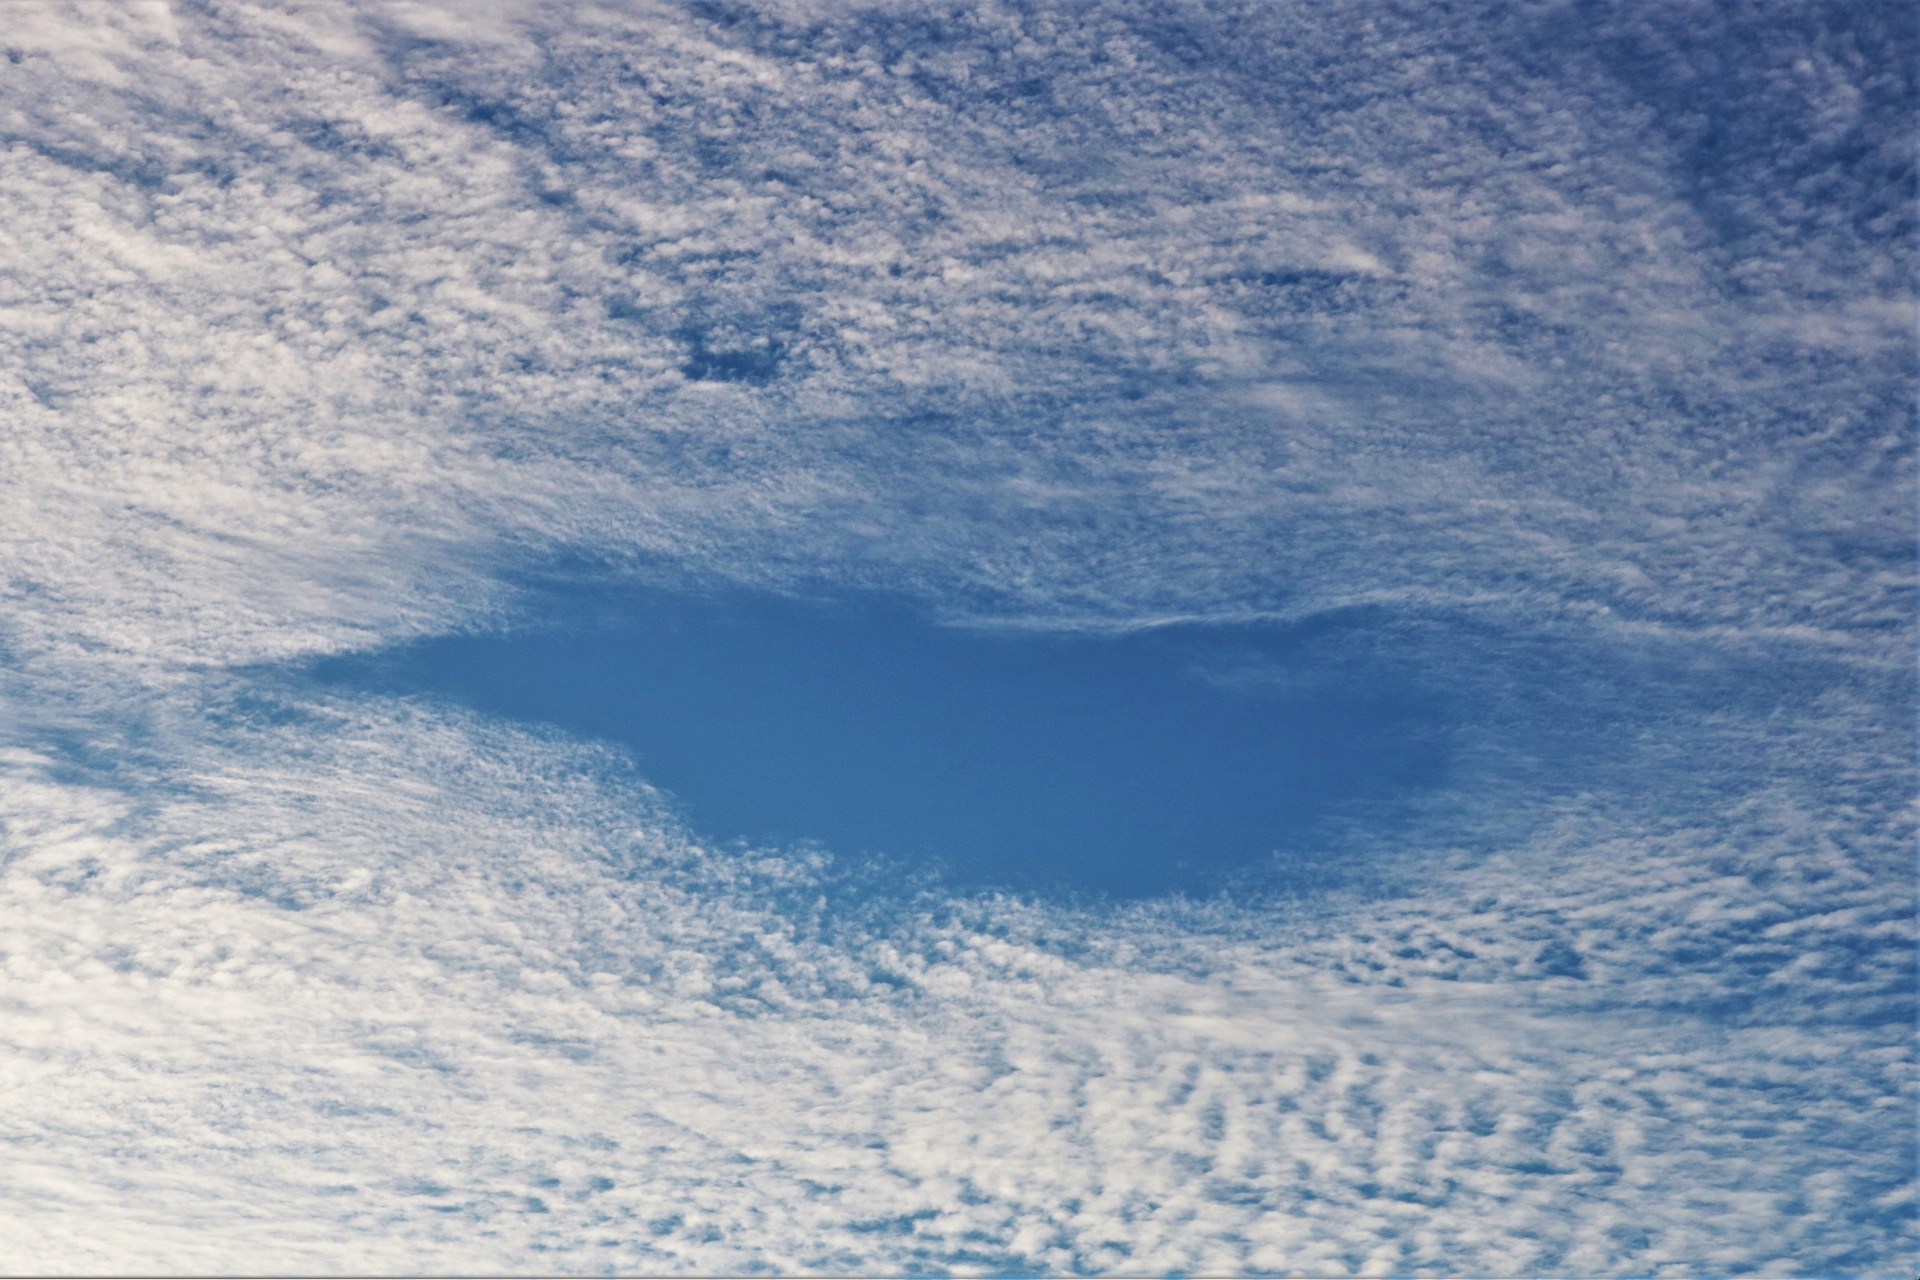 Wolken en blauwe hemelachtergrond